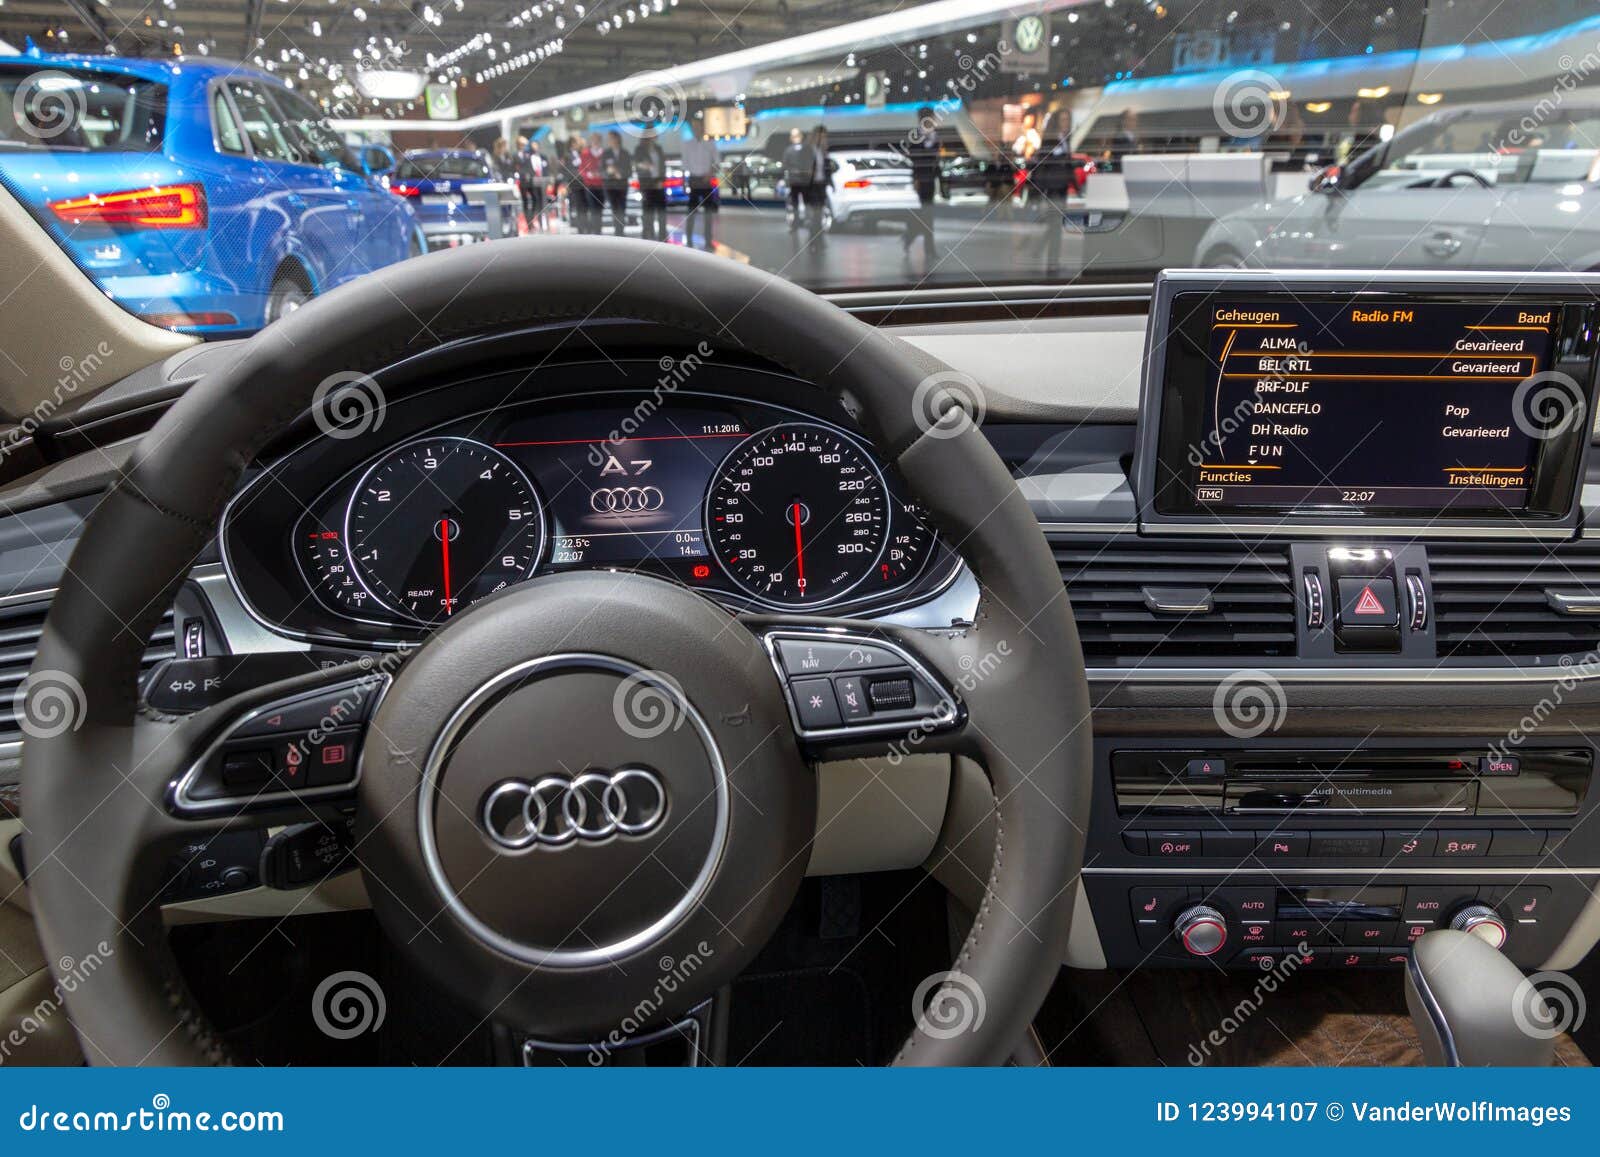 Audi A7 Car Interiour Dashboard Editorial Photography